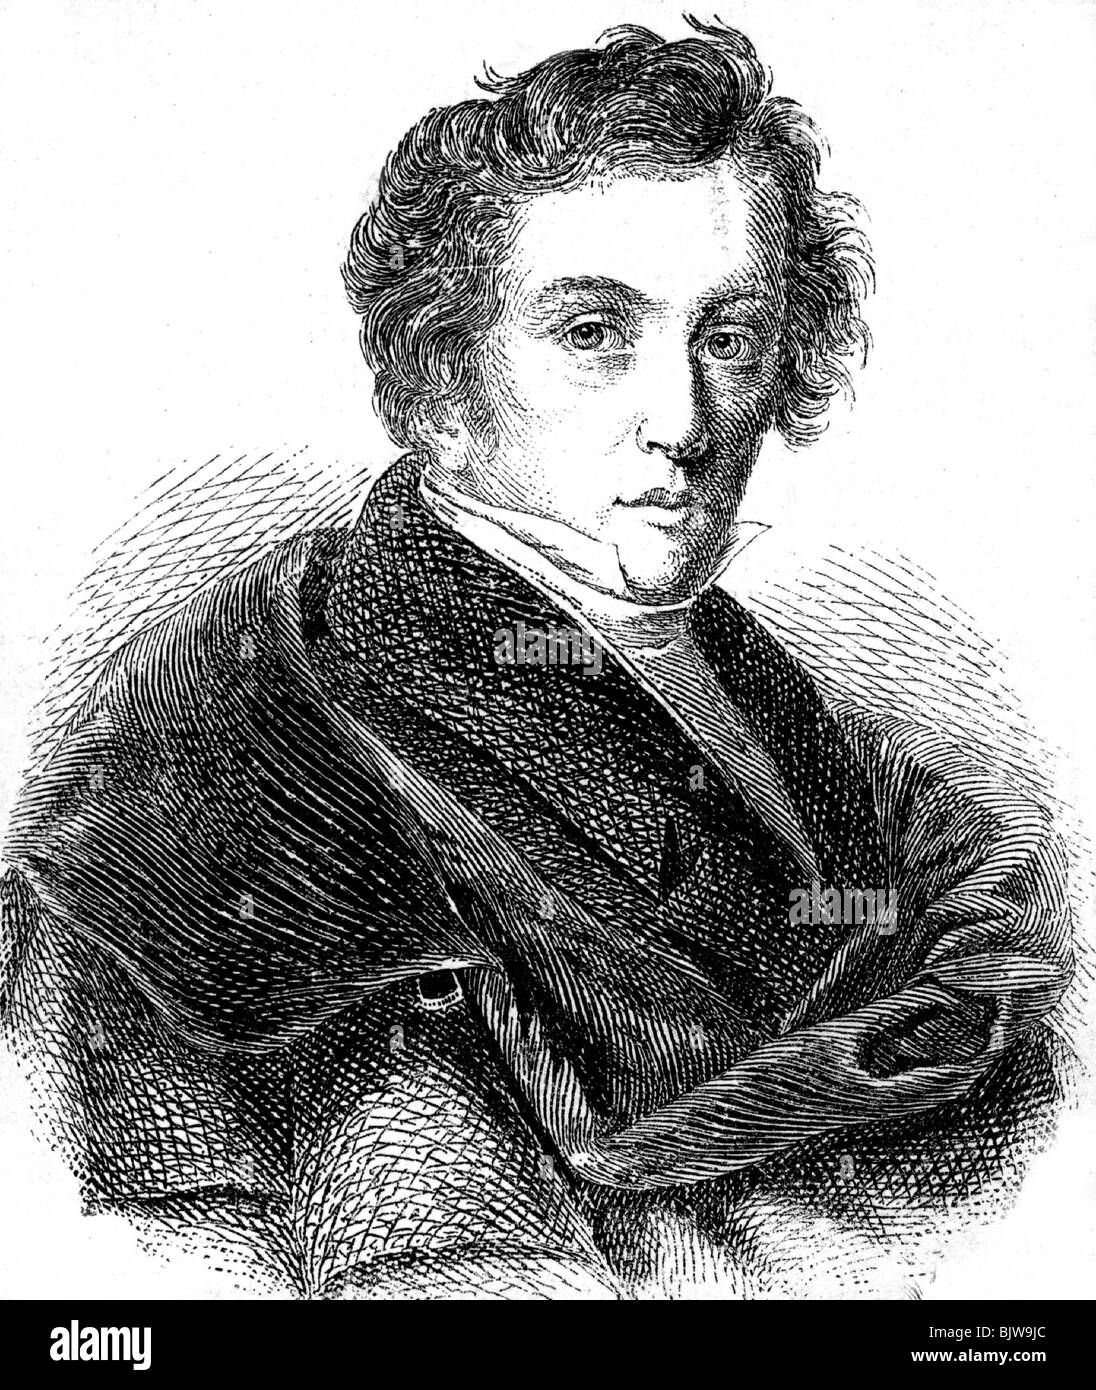 Müller, Wilhelm, 7.10.1794 - 30.9.1827, German author / writer (poet), portrait, wood engraving, circa 1800, Stock Photo